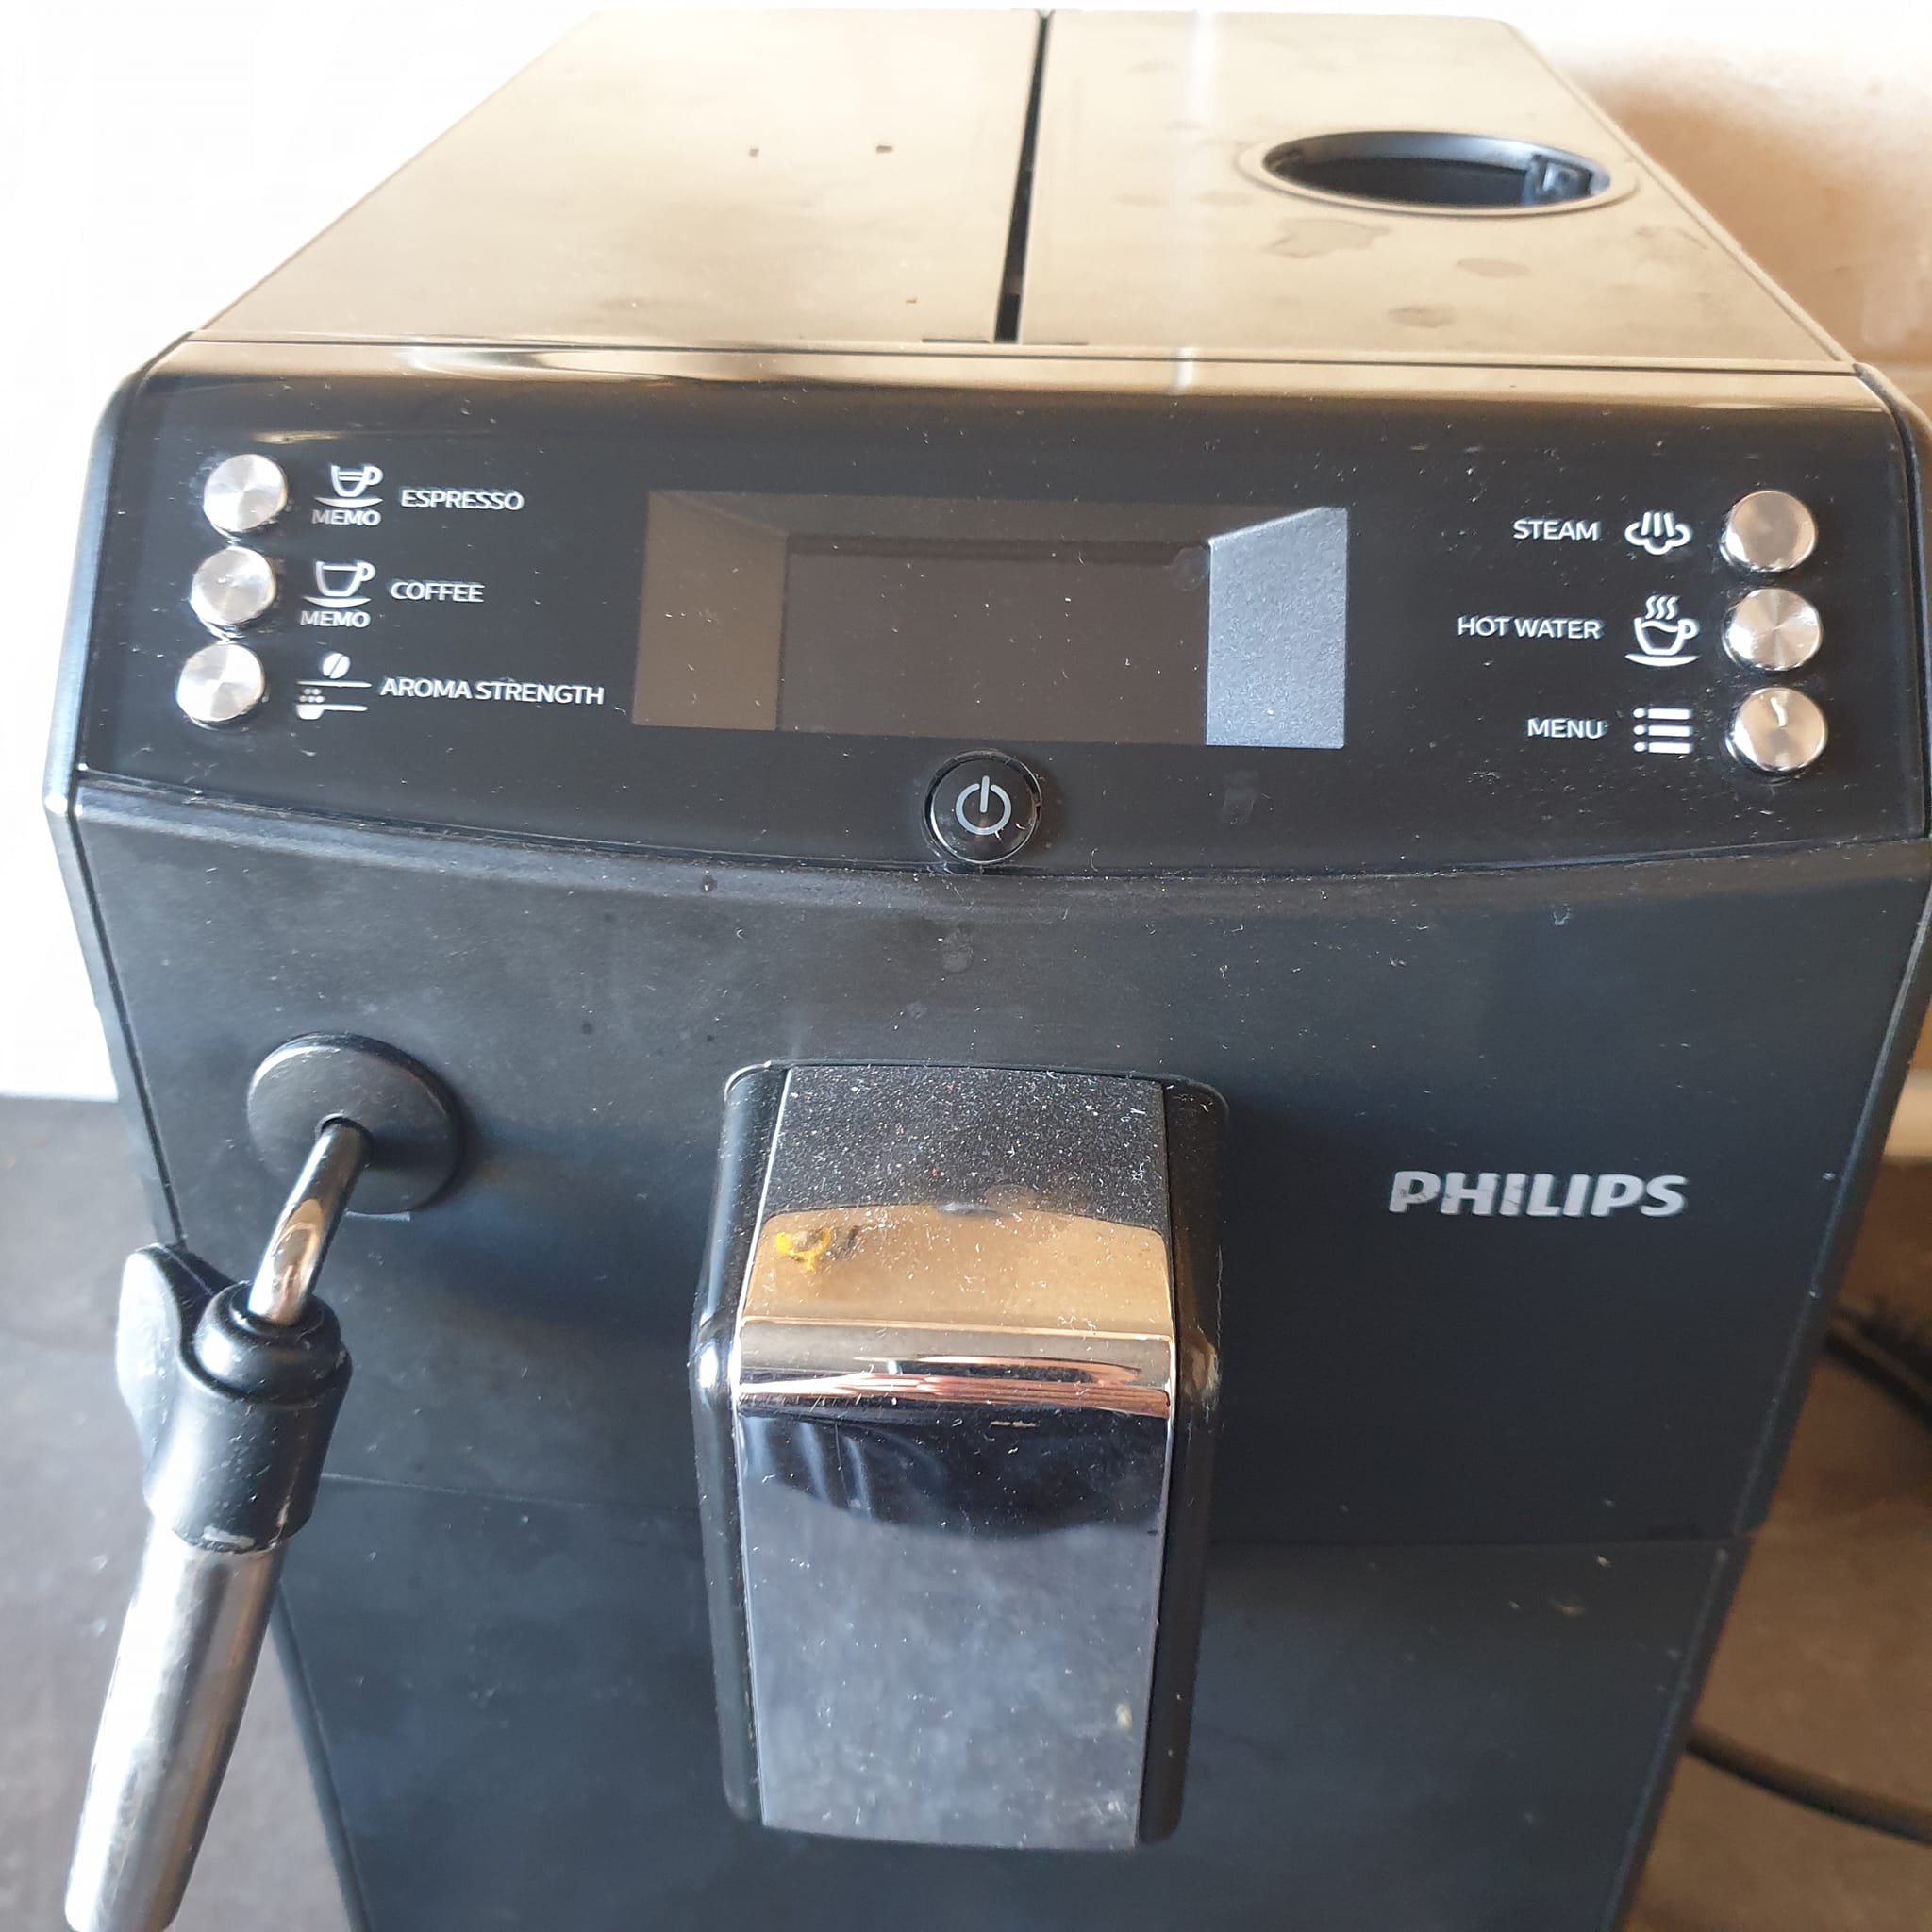 Philips 3100: Utilities